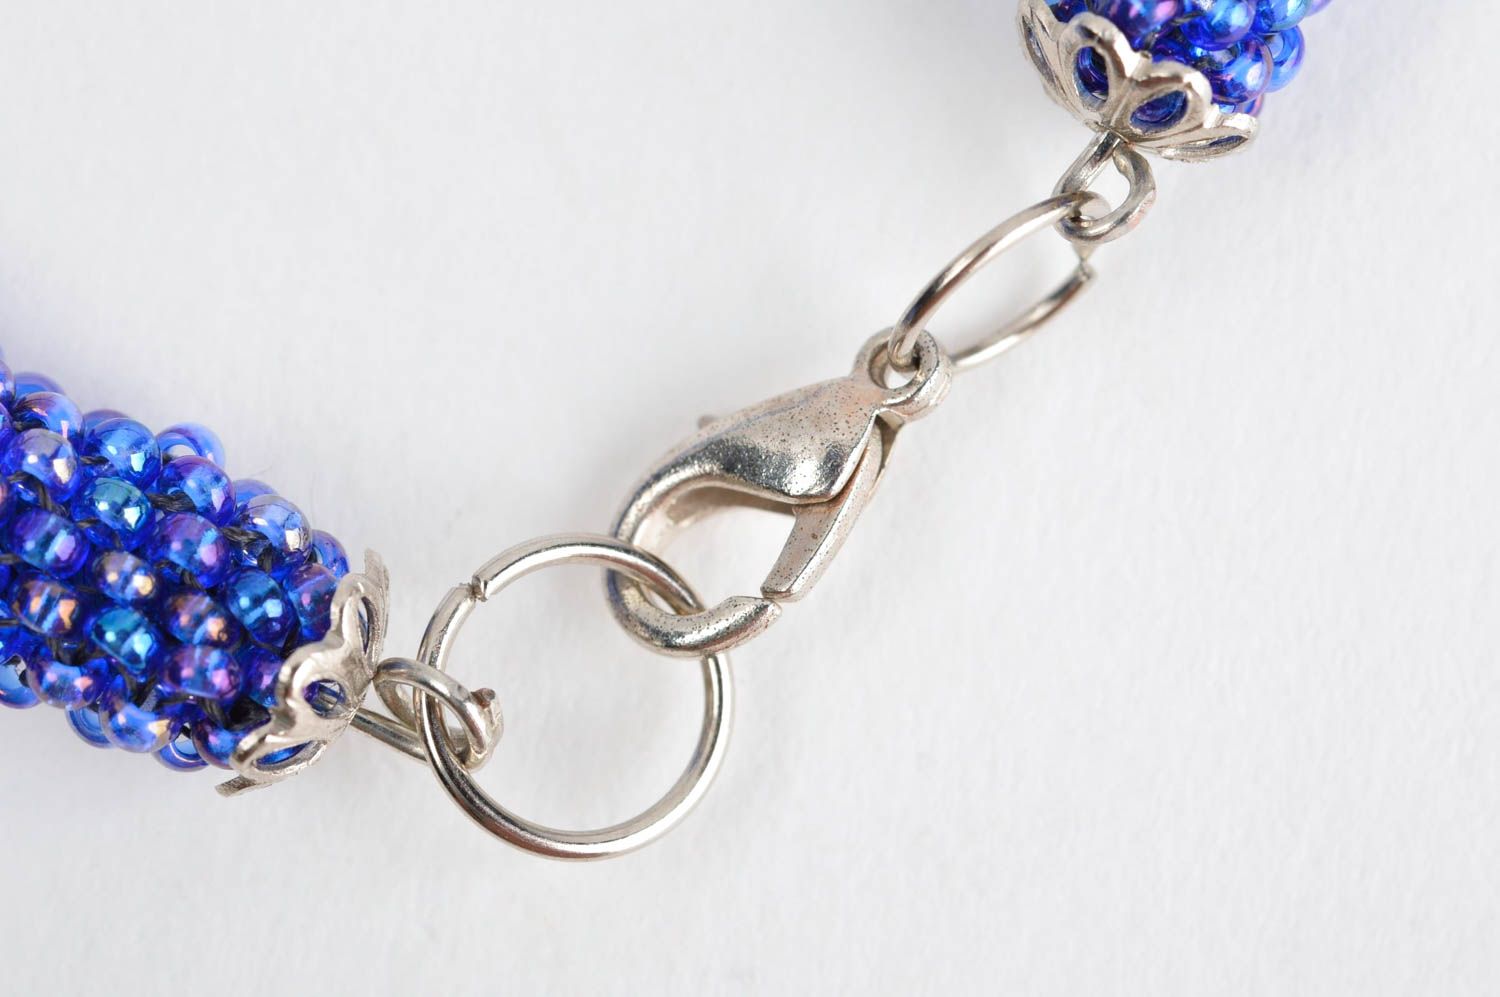 handmade beads necklace handmade bijouterie jewelry of beads beaded accessories photo 4